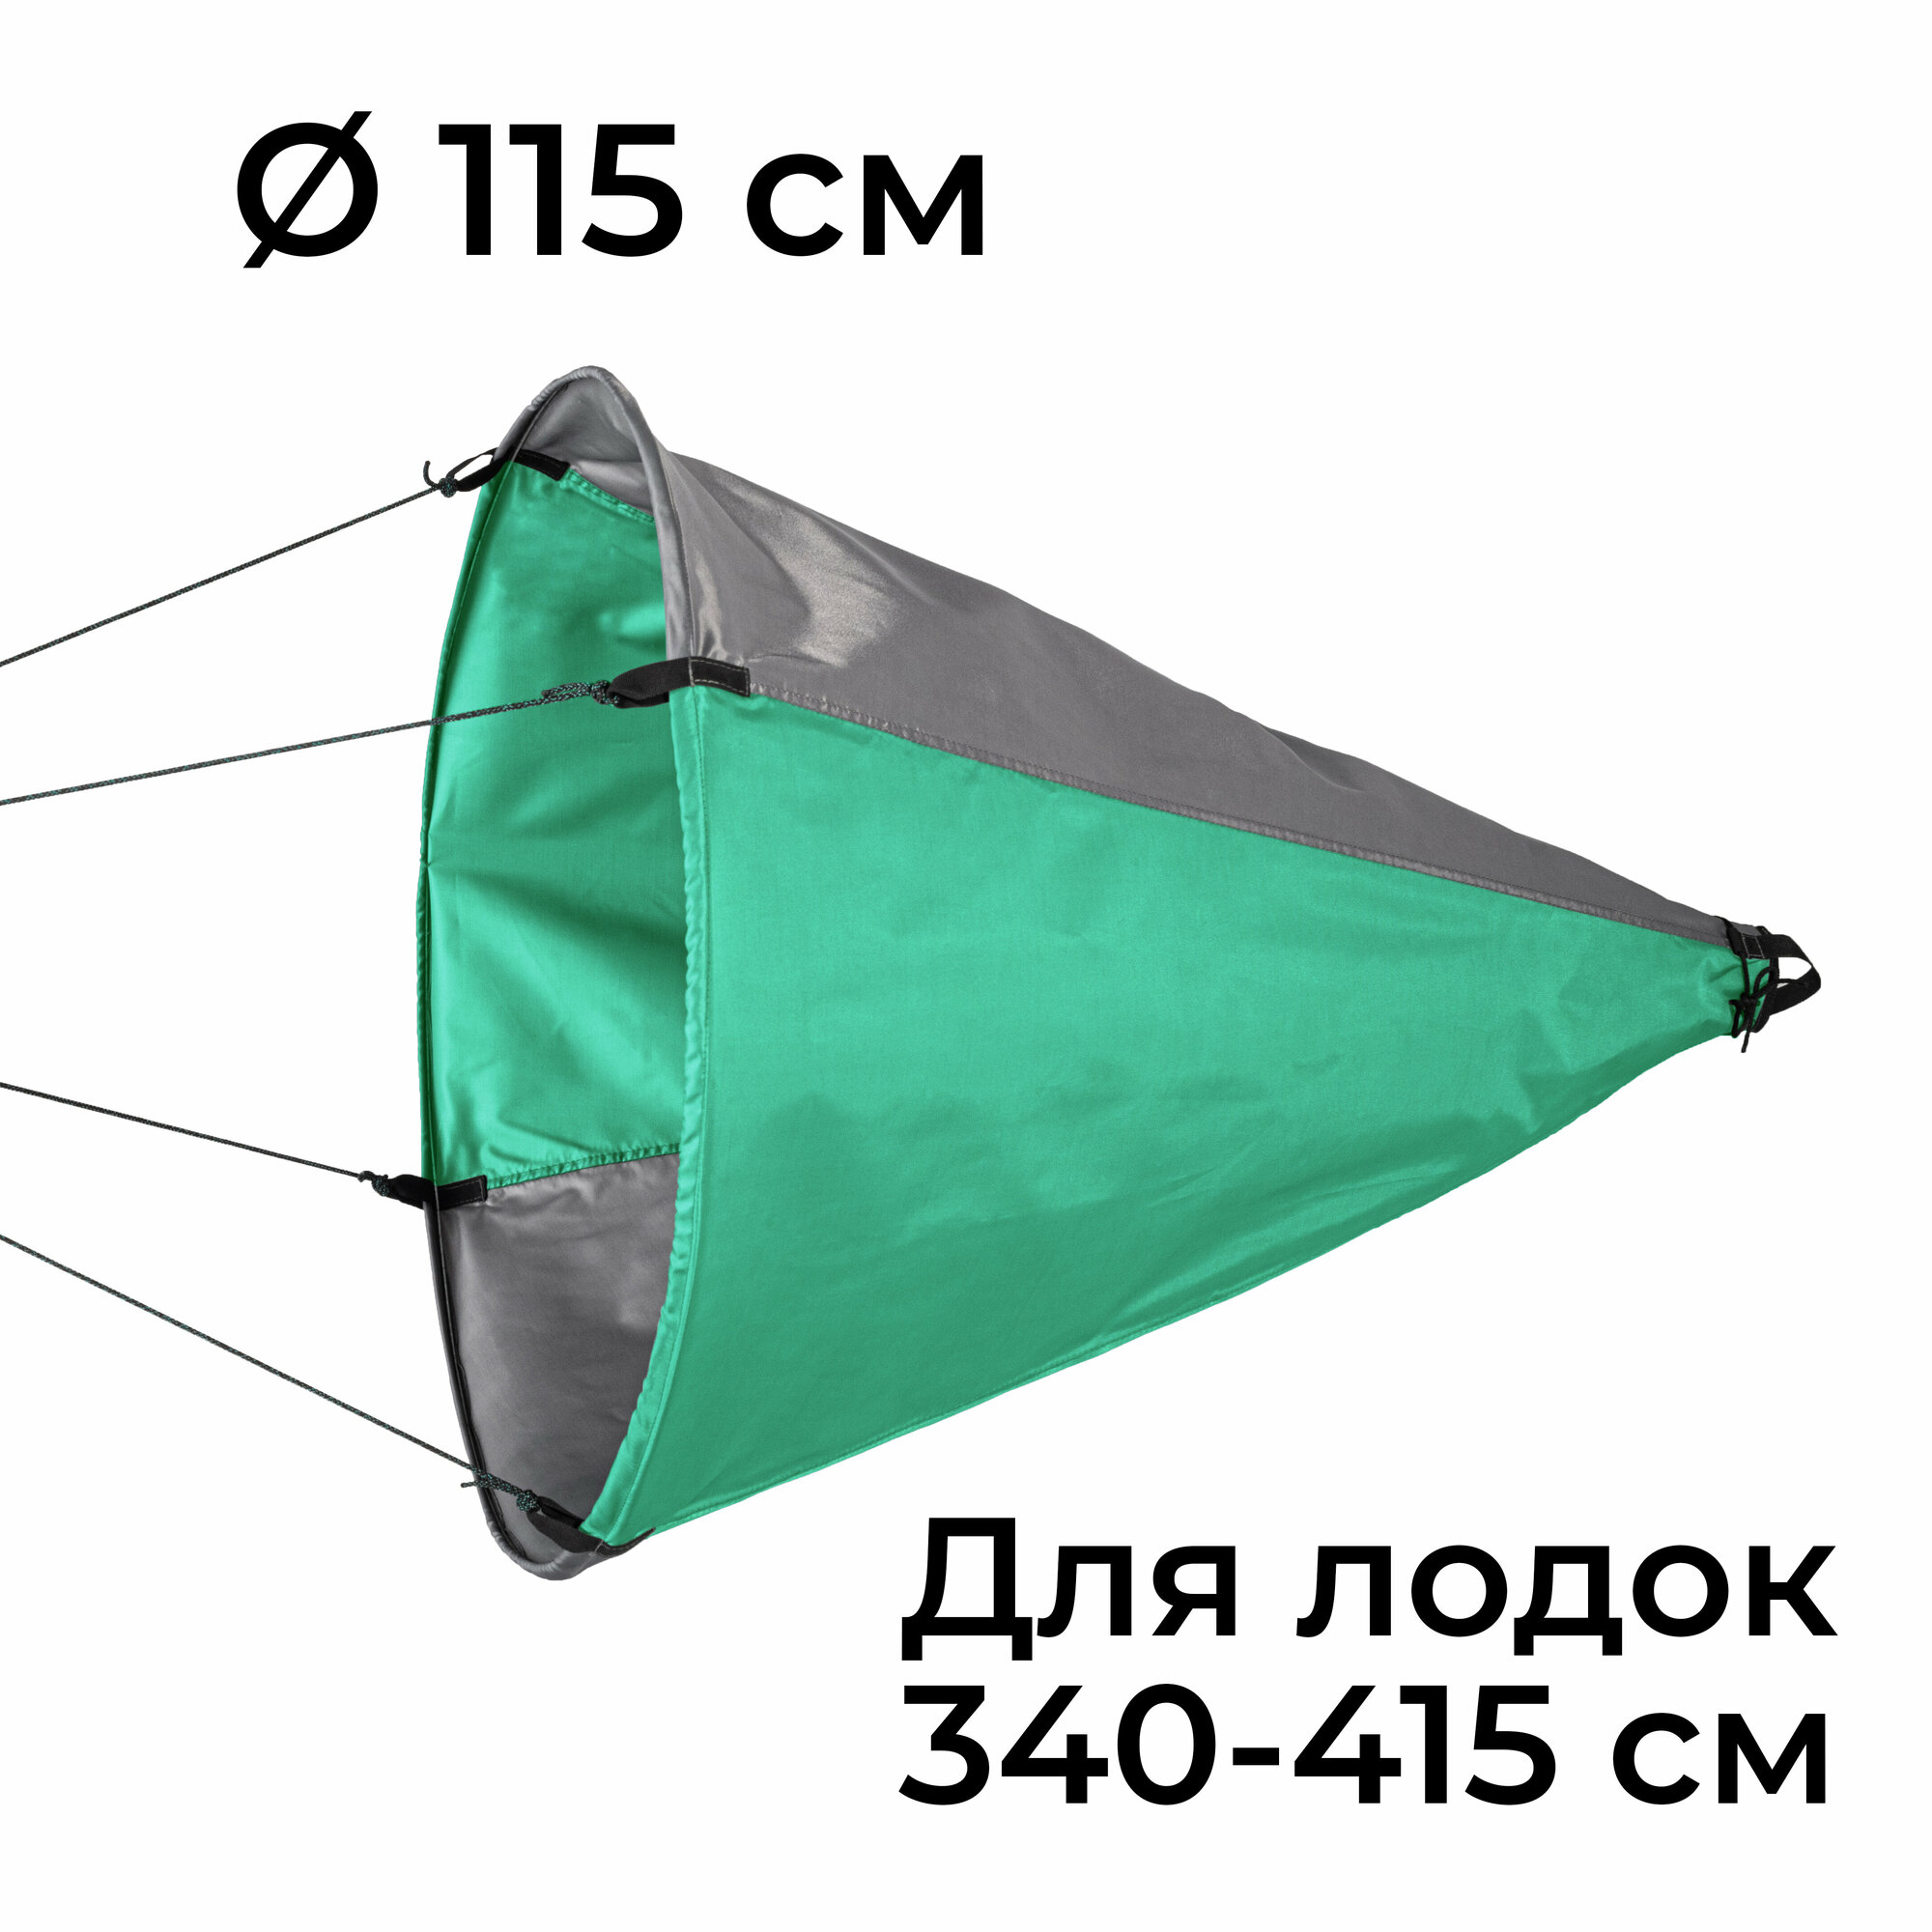 Плавучий якорь-парашют "Фролыч" Ø 115 см для лодок от 34 до 415 м длиной зелено-серый